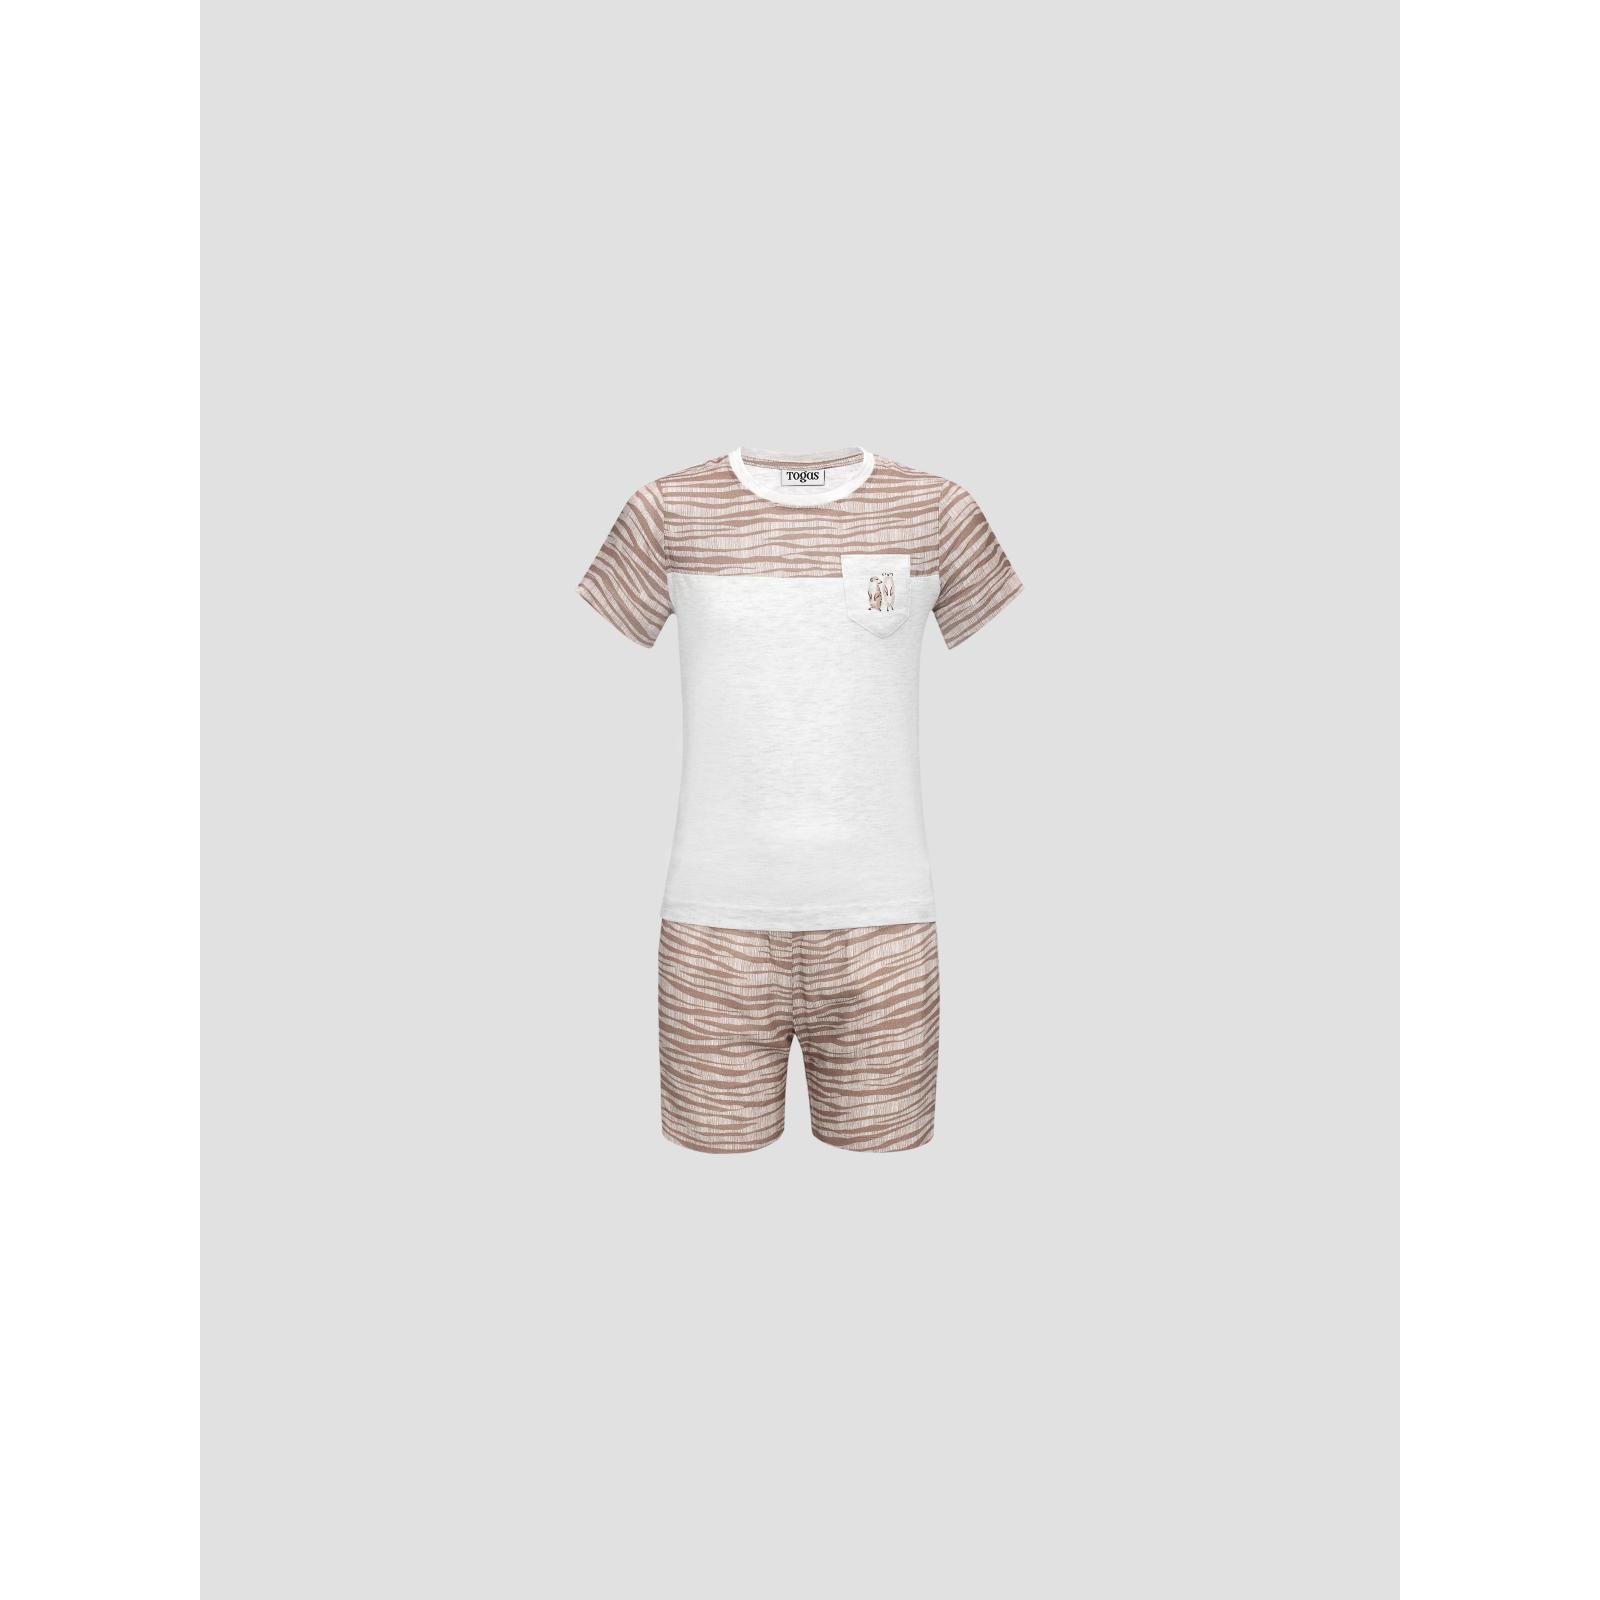 Пижама для мальчиков Kids by togas Сафари бежевый 92-98 см пижама сорочка шорты